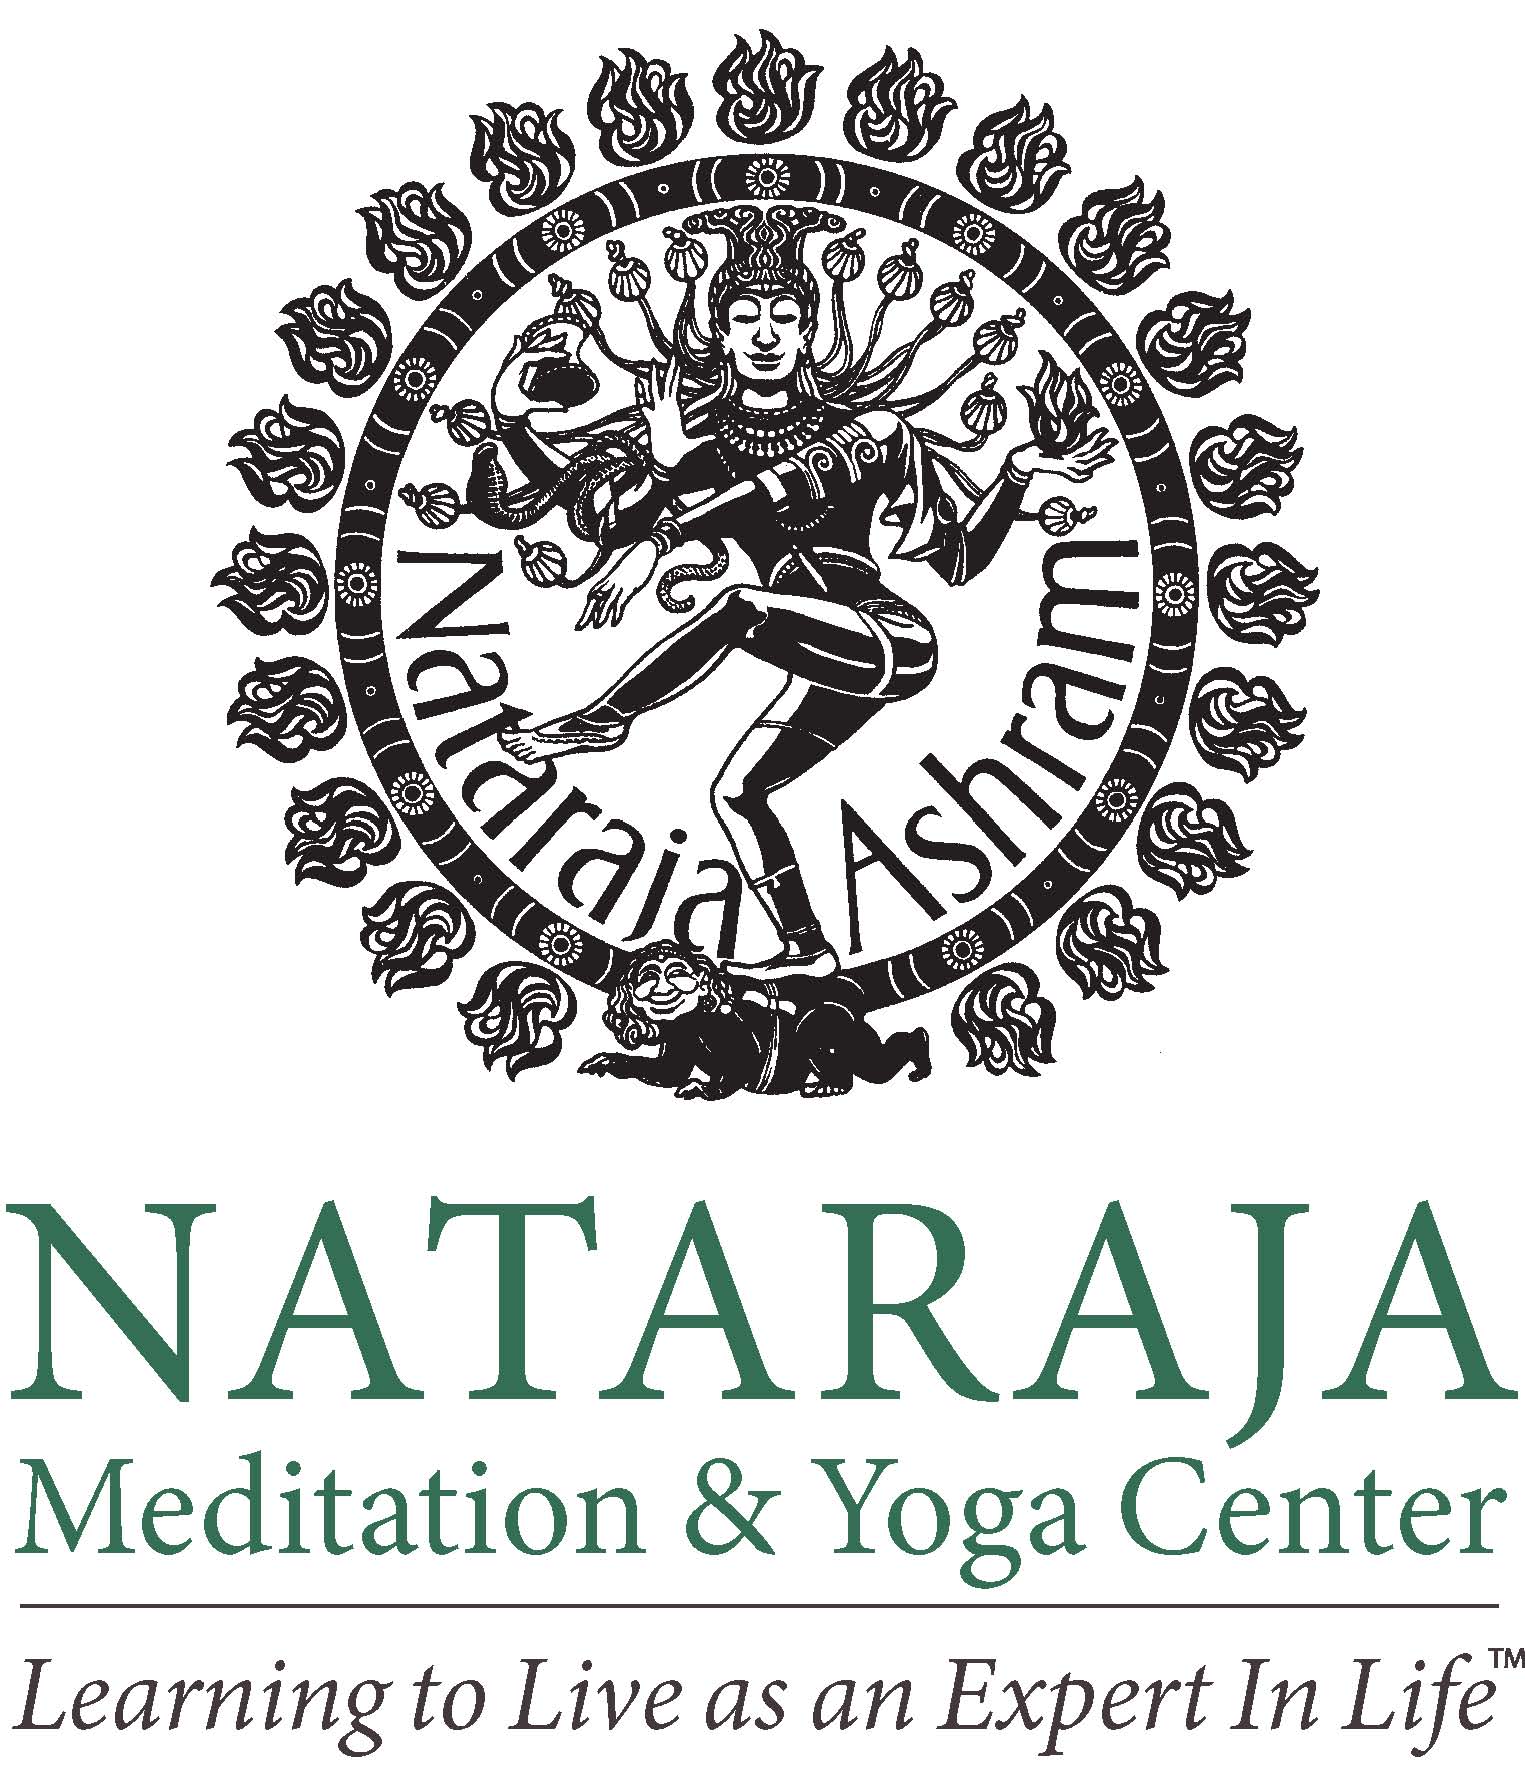 Nataraja Meditation & Yoga Center